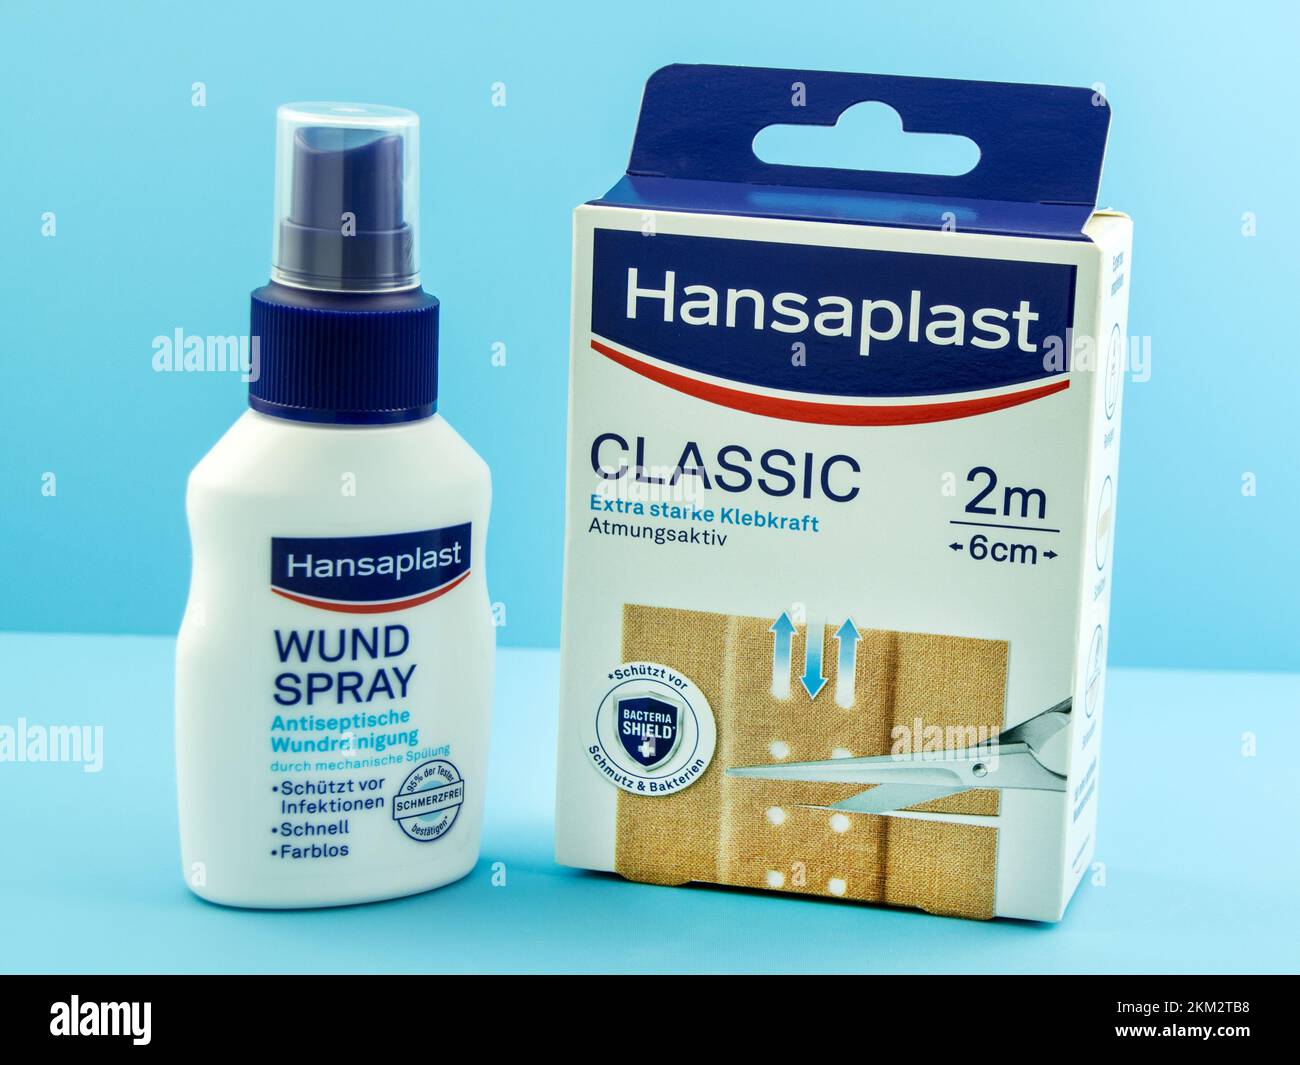 Hamburg, Germany - November 24 2022: Hansaplast Wundspray und Pflaster  Antiseptisch auf blau - Hansaplast wound spray and plaster antiseptic on  blu Stock Photo - Alamy